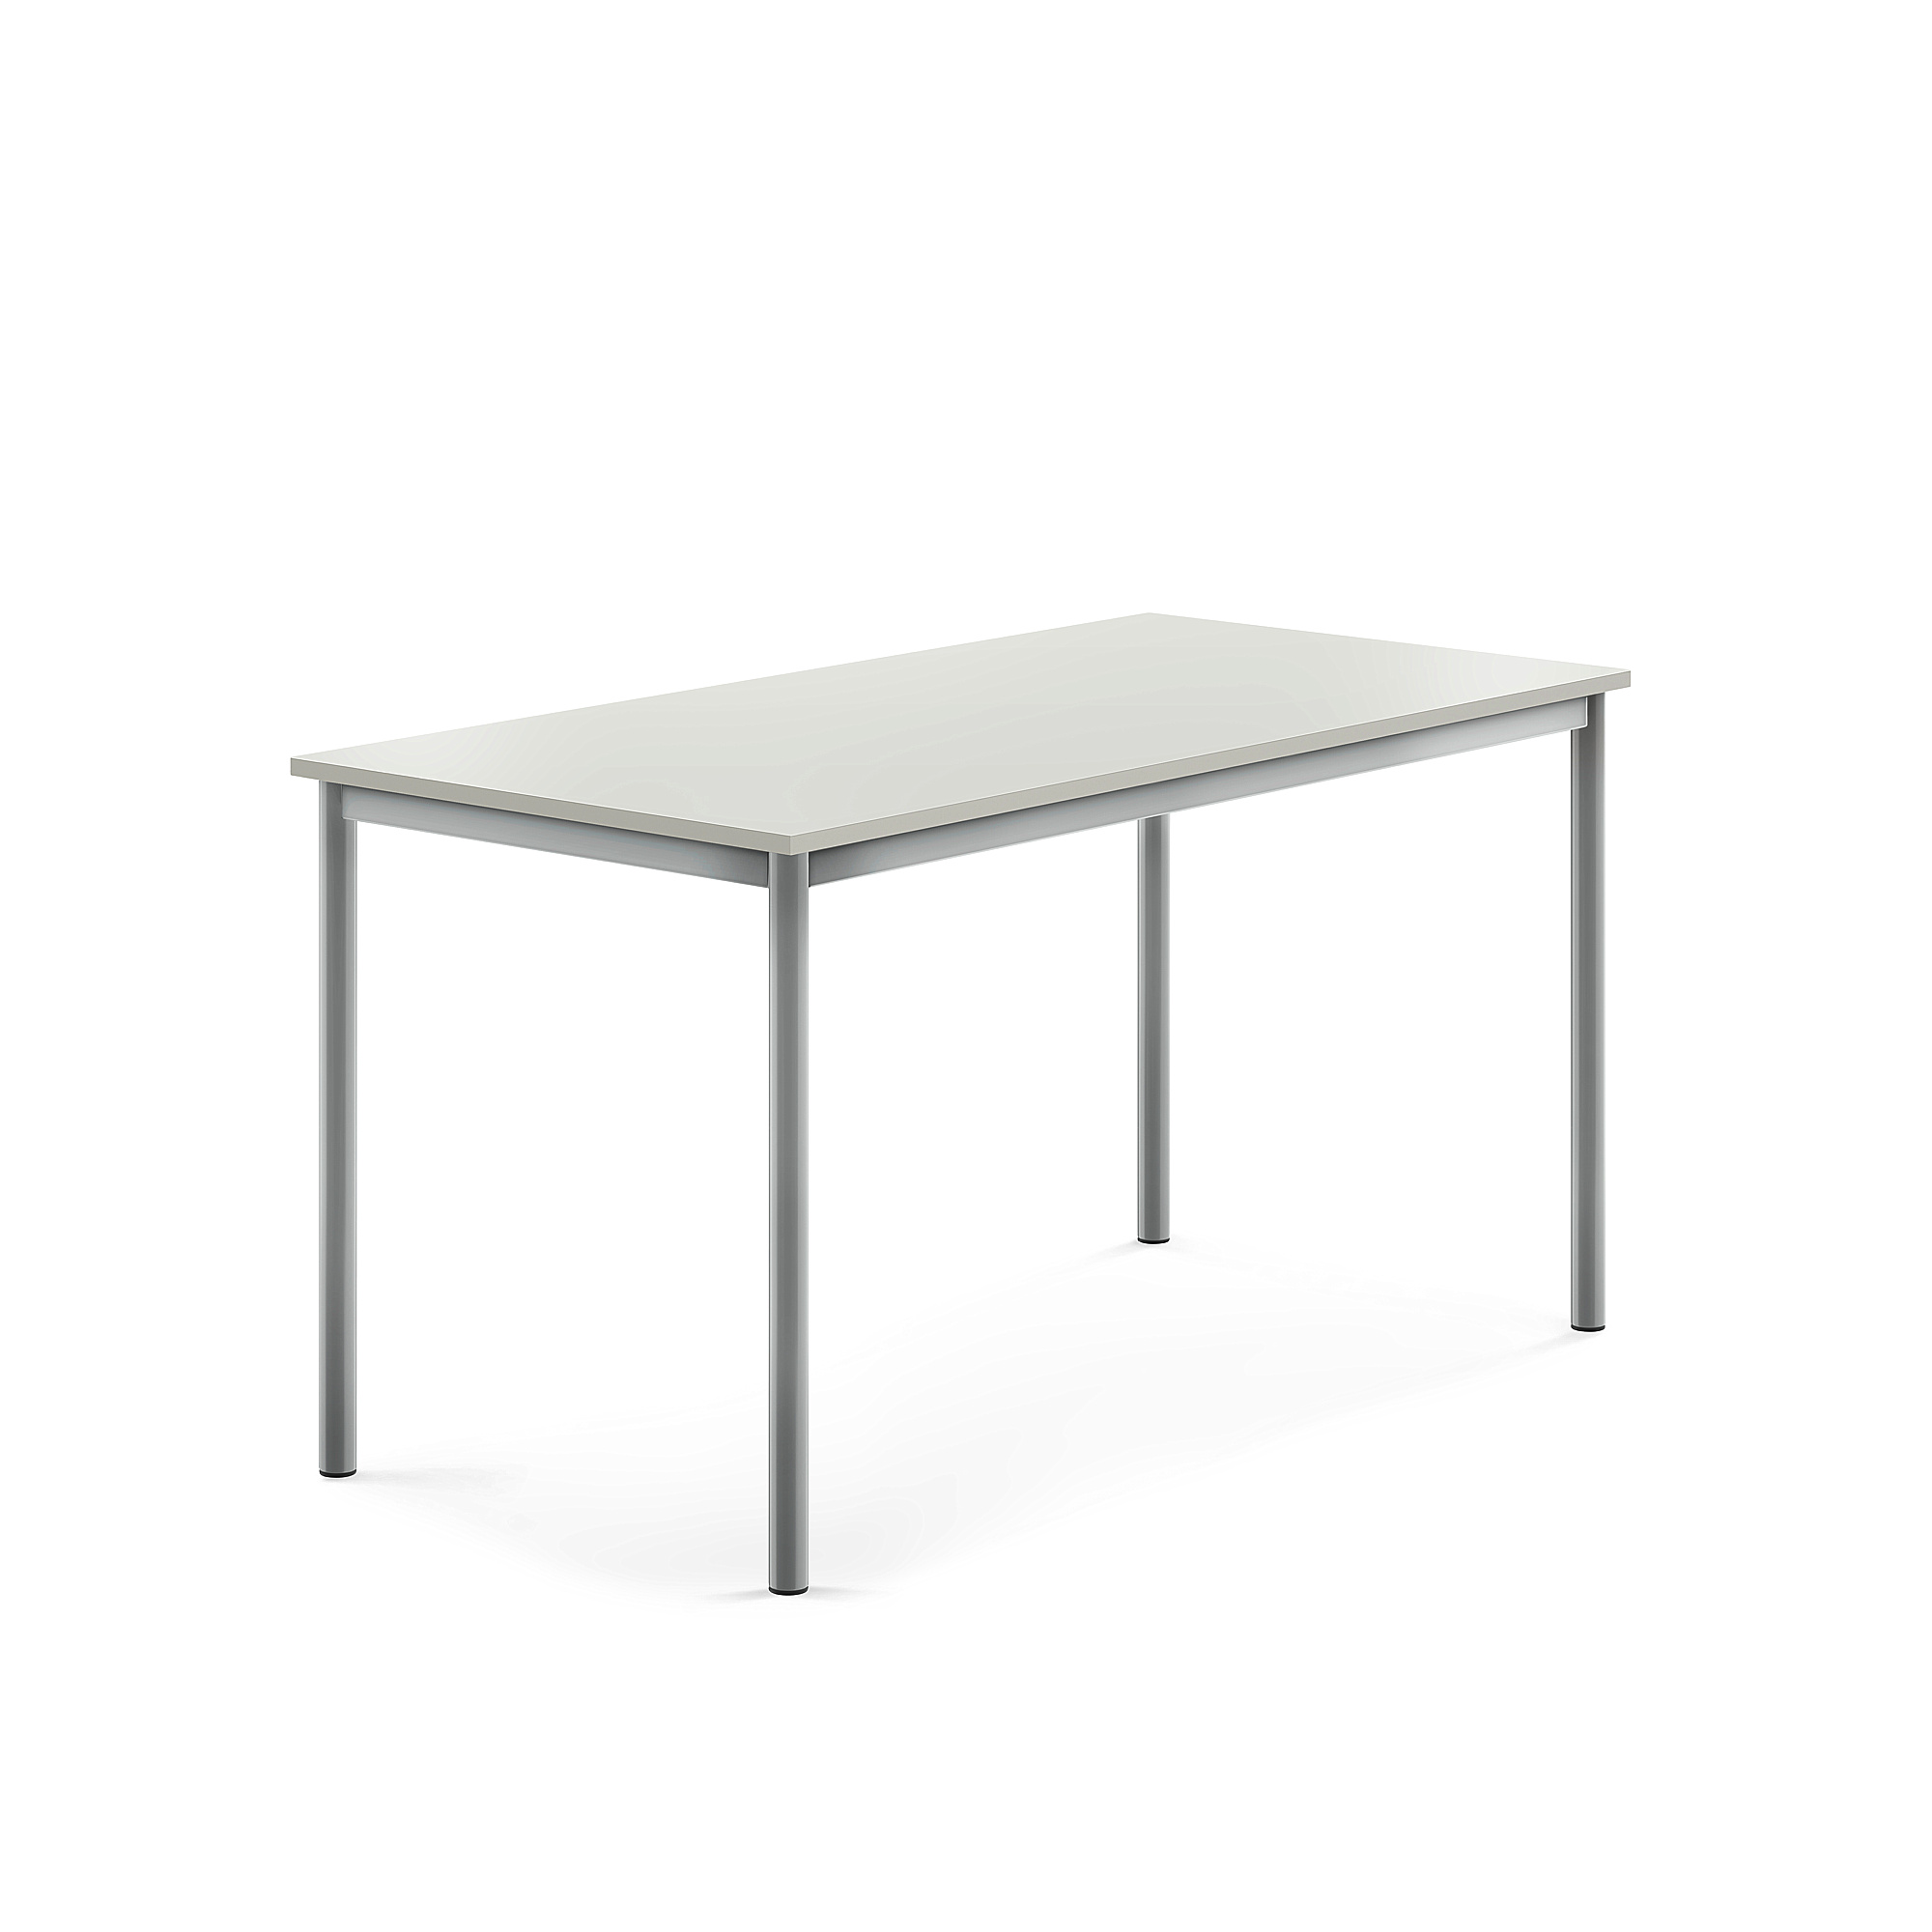 Stůl BORÅS, 1400x700x720 mm, stříbrné nohy, HPL deska, šedá